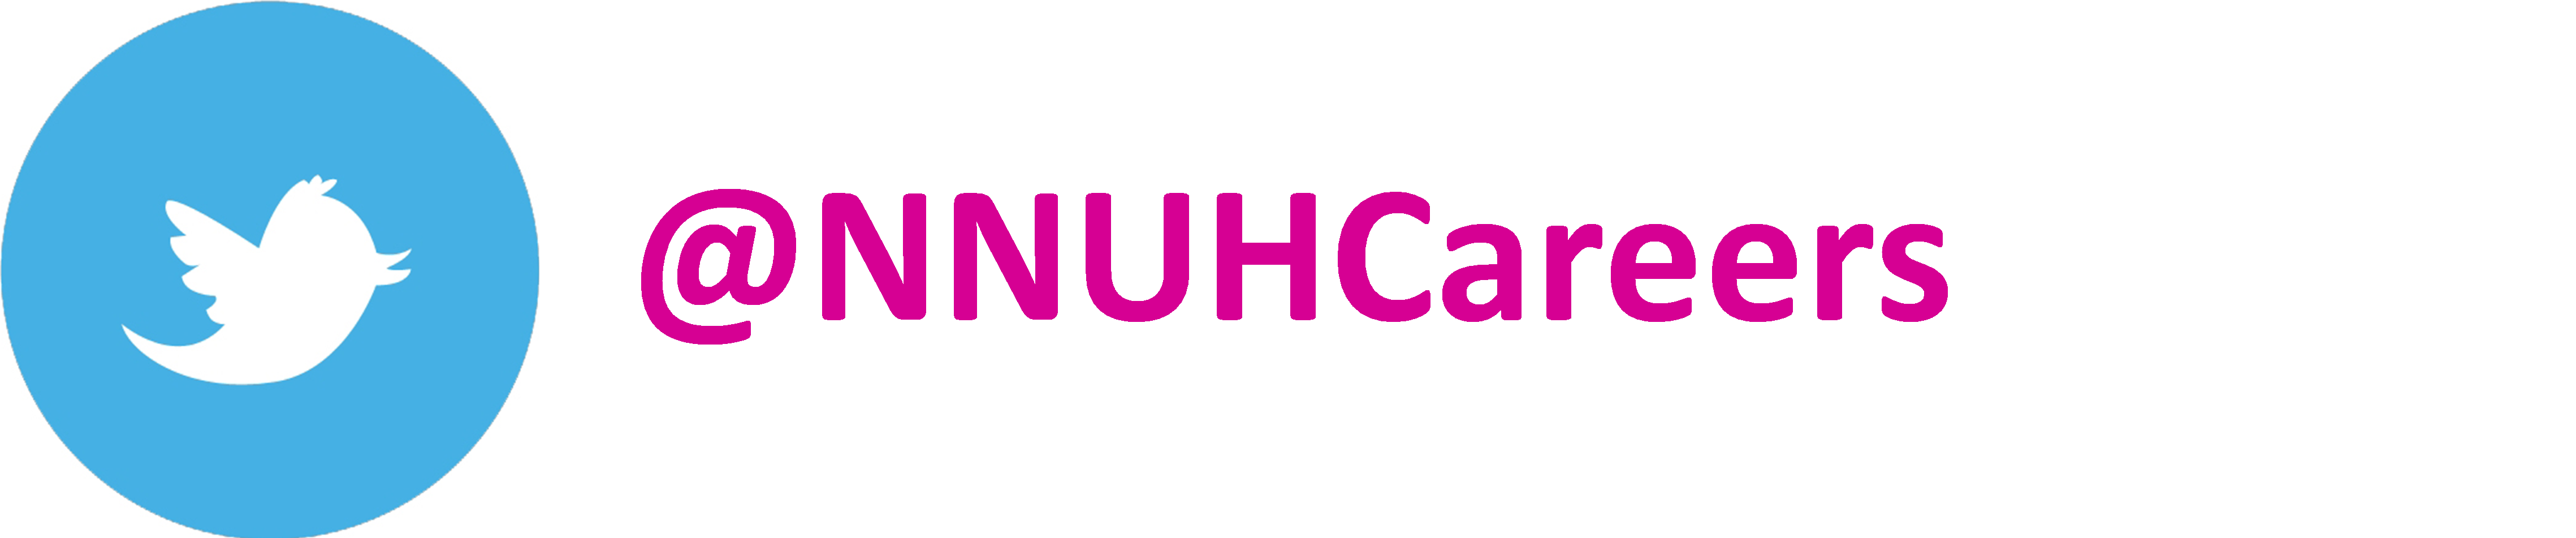 Purple Twitter Logo - Norfolk and Norwich University Hospitals NHS Foundation Trust ...